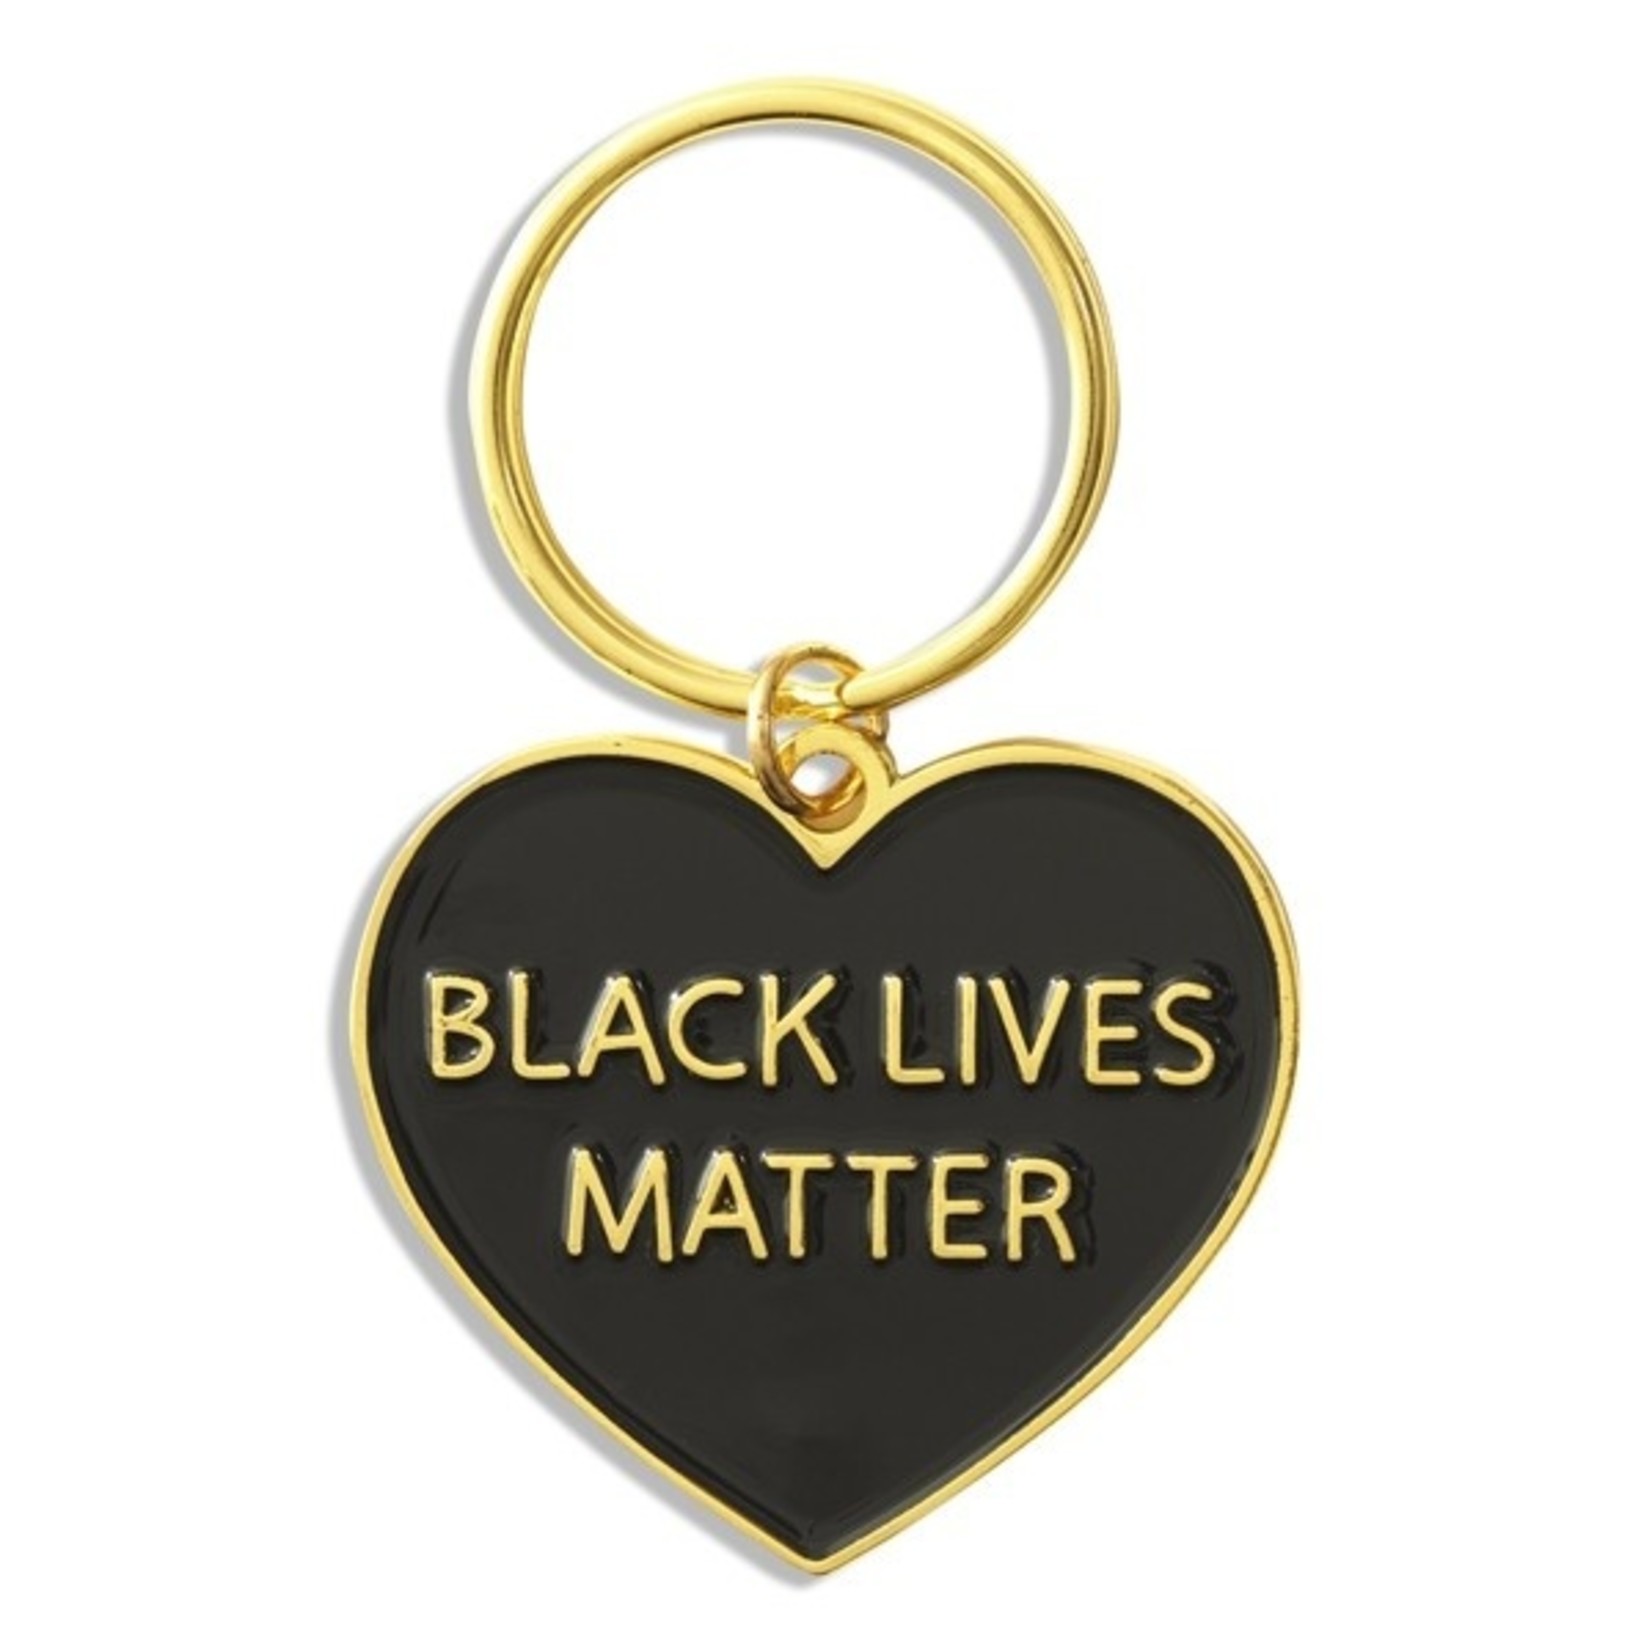 The Found Black Lives Matter Enamel Keychain